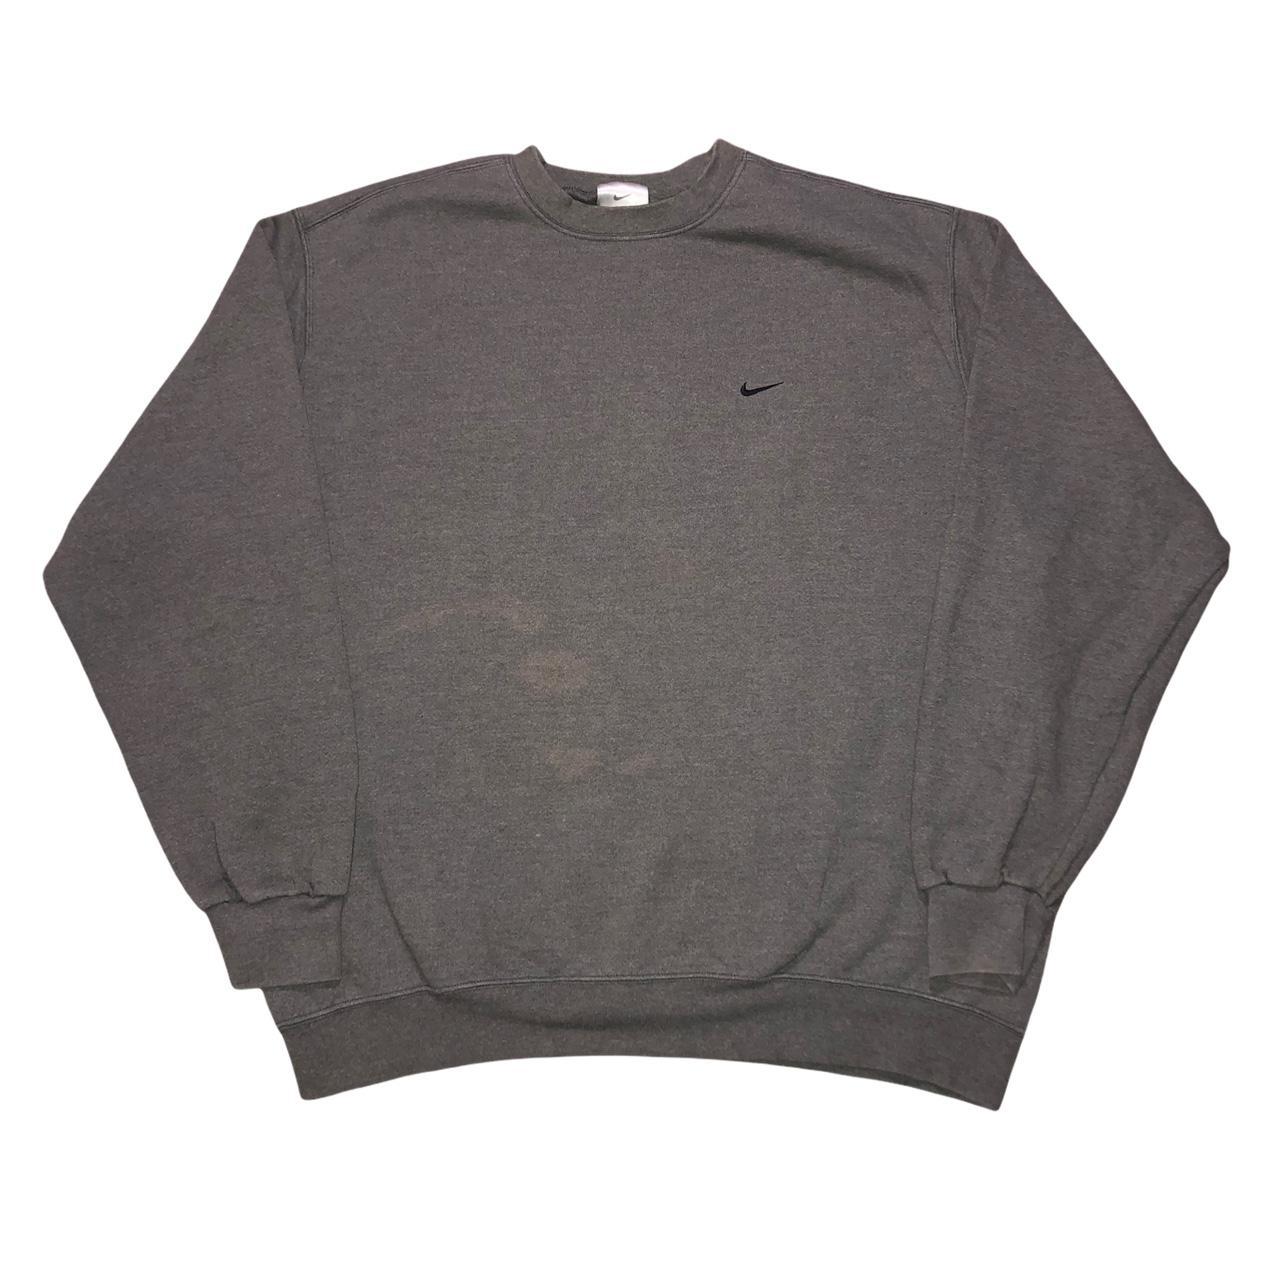 Nike Men's Grey and Black Sweatshirt